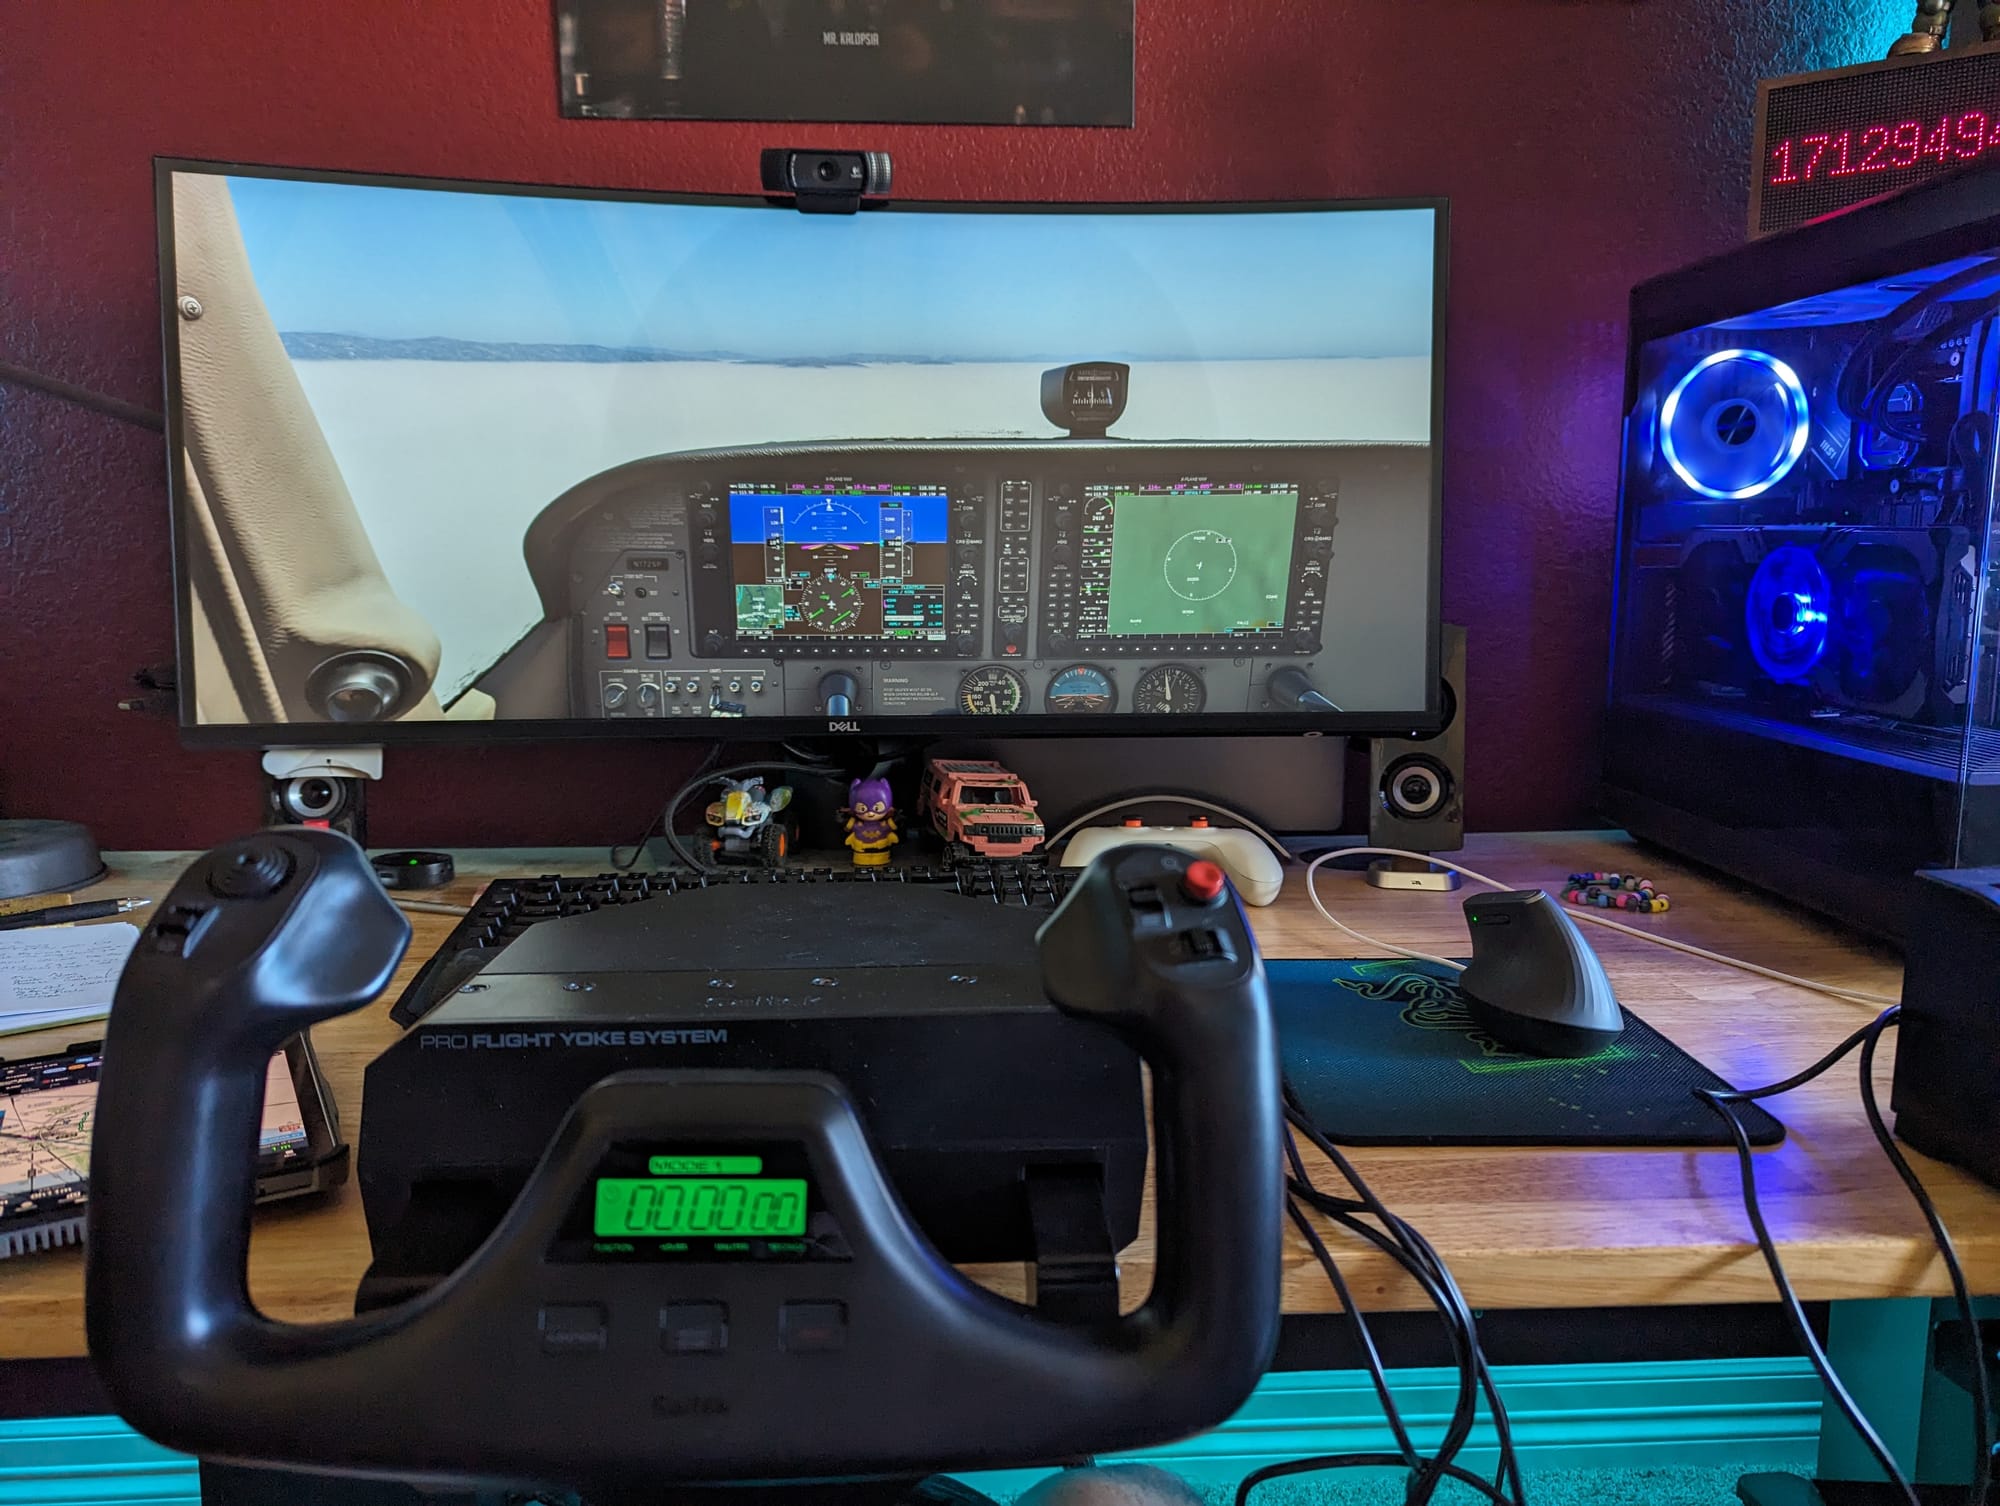 Flight Simulator and PilotEdge For IFR Training